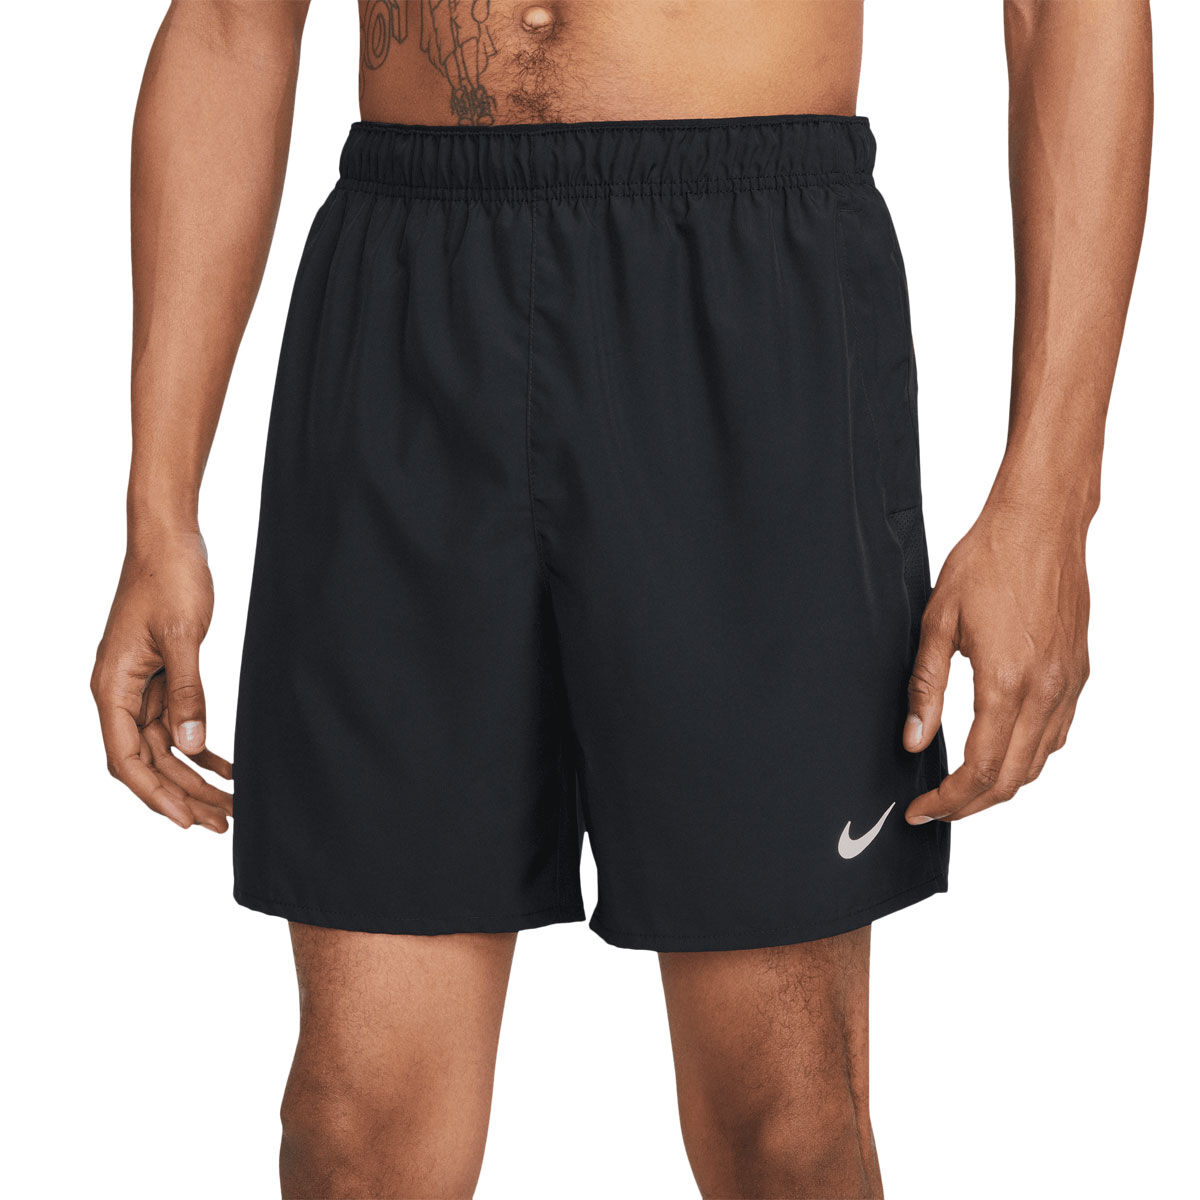 Nike Running Shorts Vintage Hot Pants Short Shorts Black & White Retro 90s  Style - Etsy